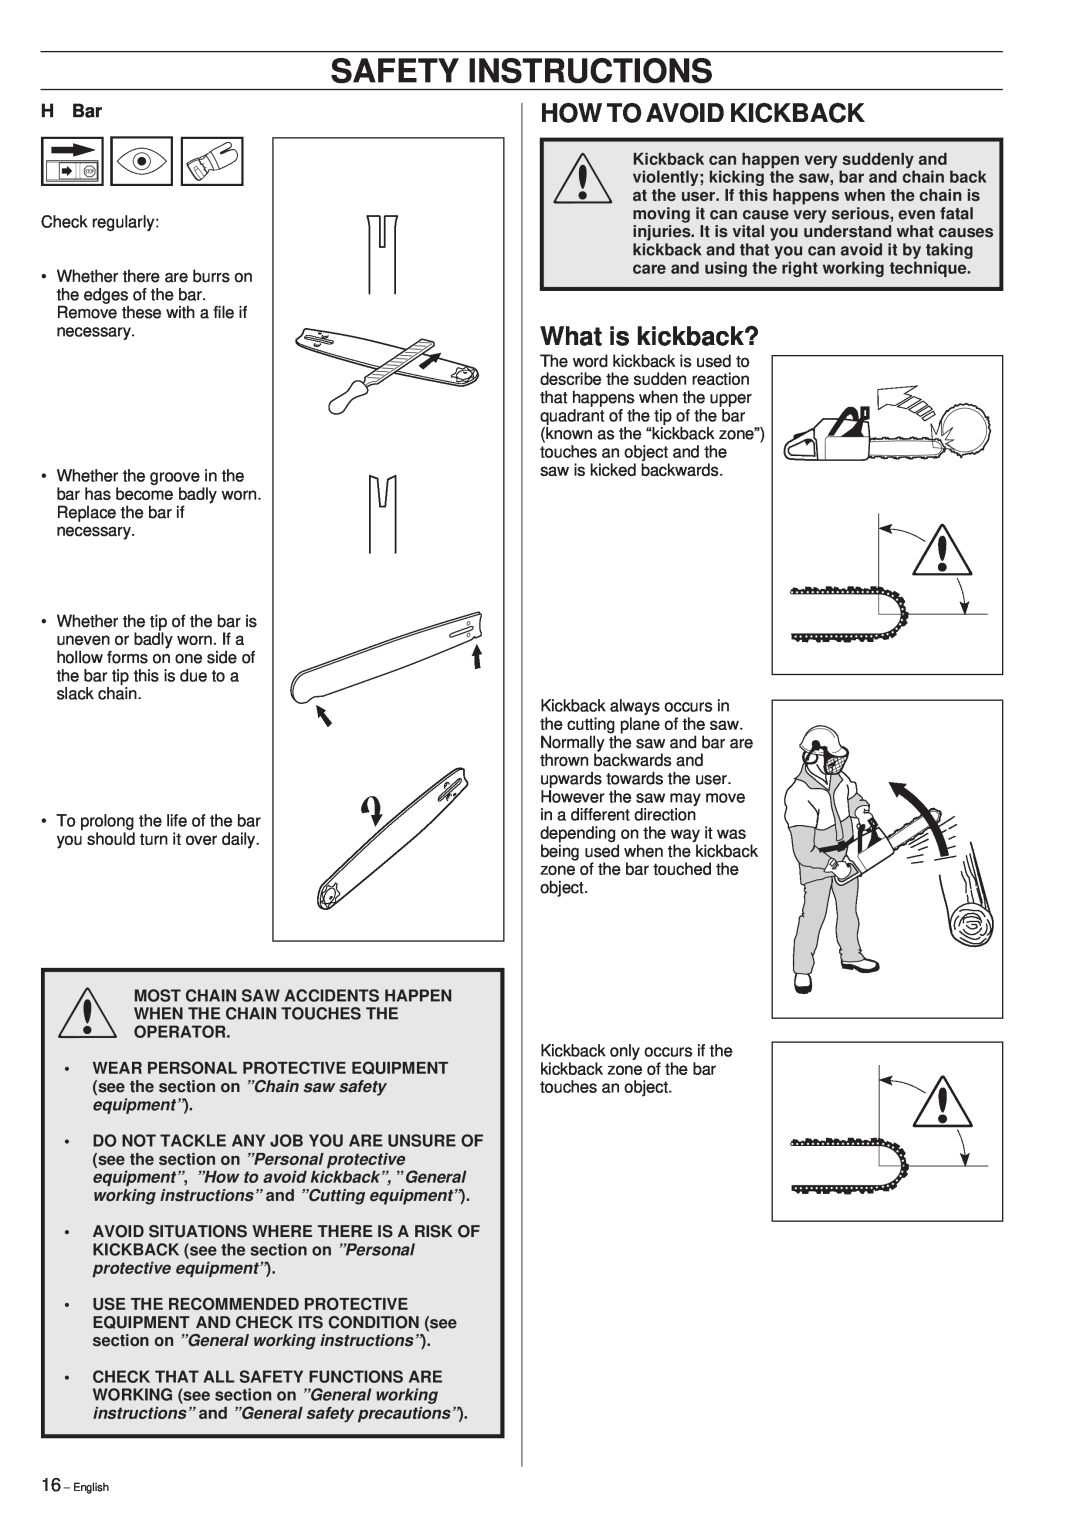 Husqvarna 261 manual Safety Instructions, How To Avoid Kickback, What is kickback?, H Bar 